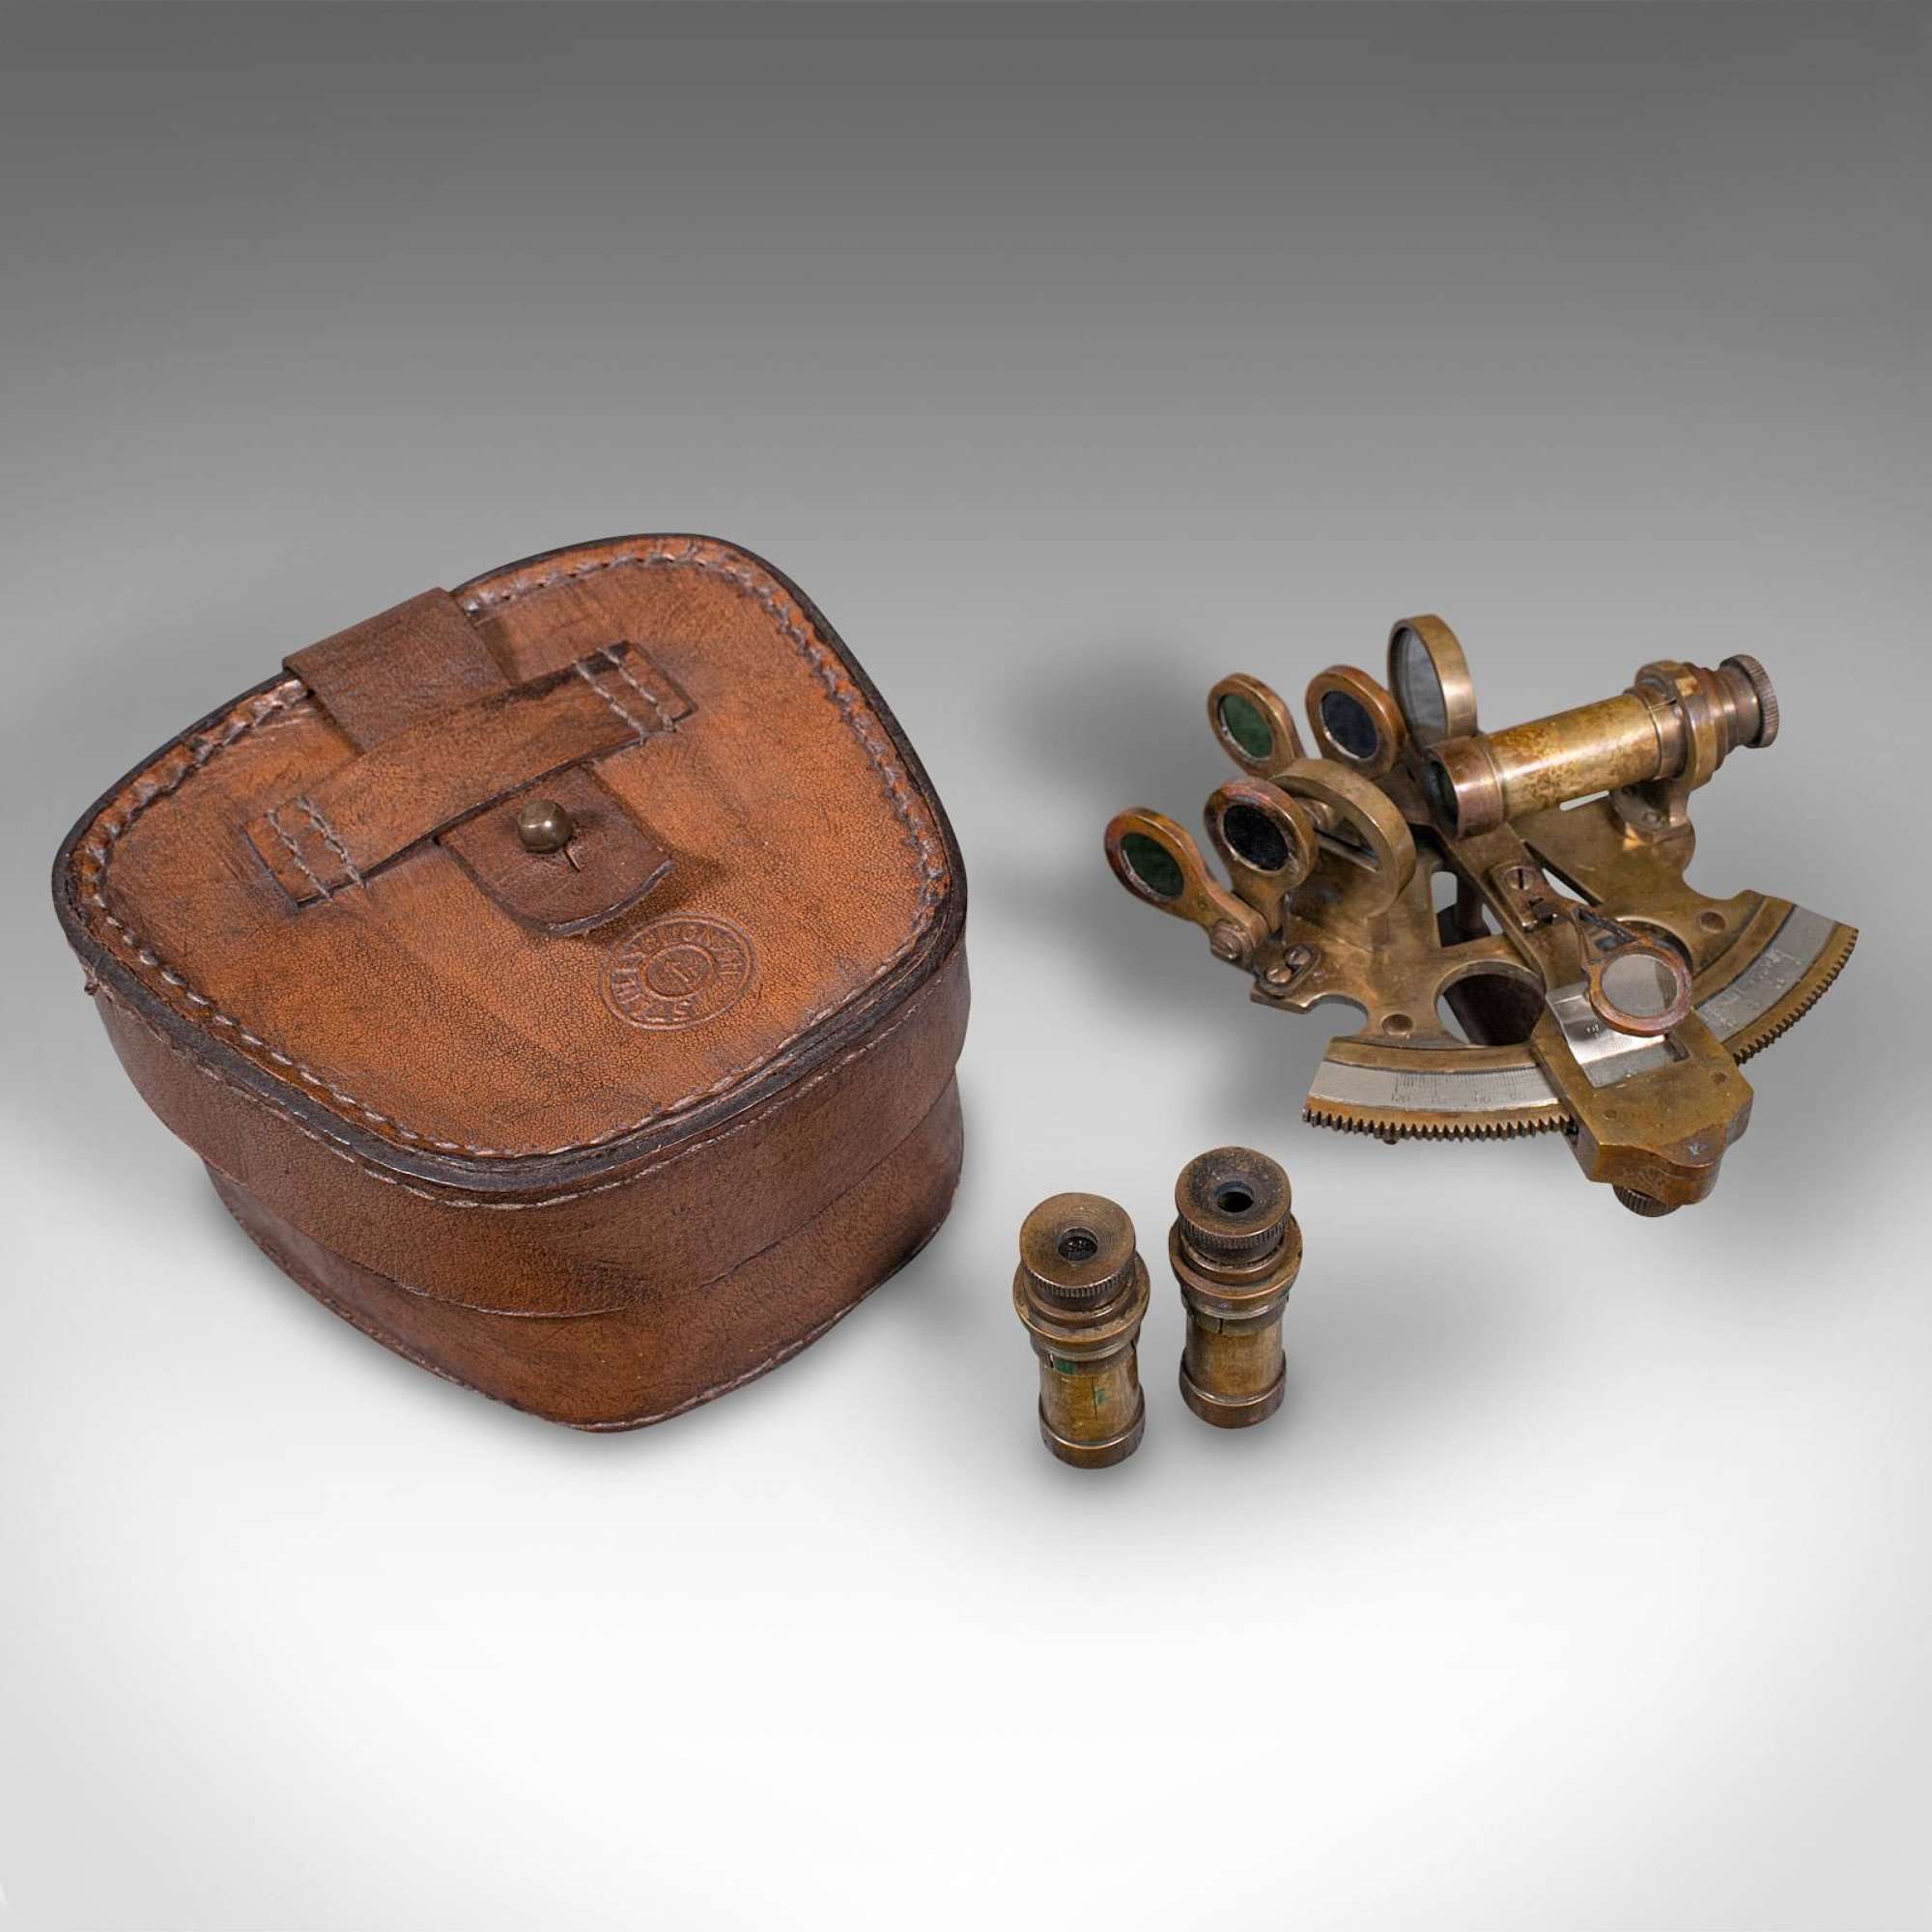 Antique Field Sextant, English, Brass, Military Instrument, Stanley, Victorian